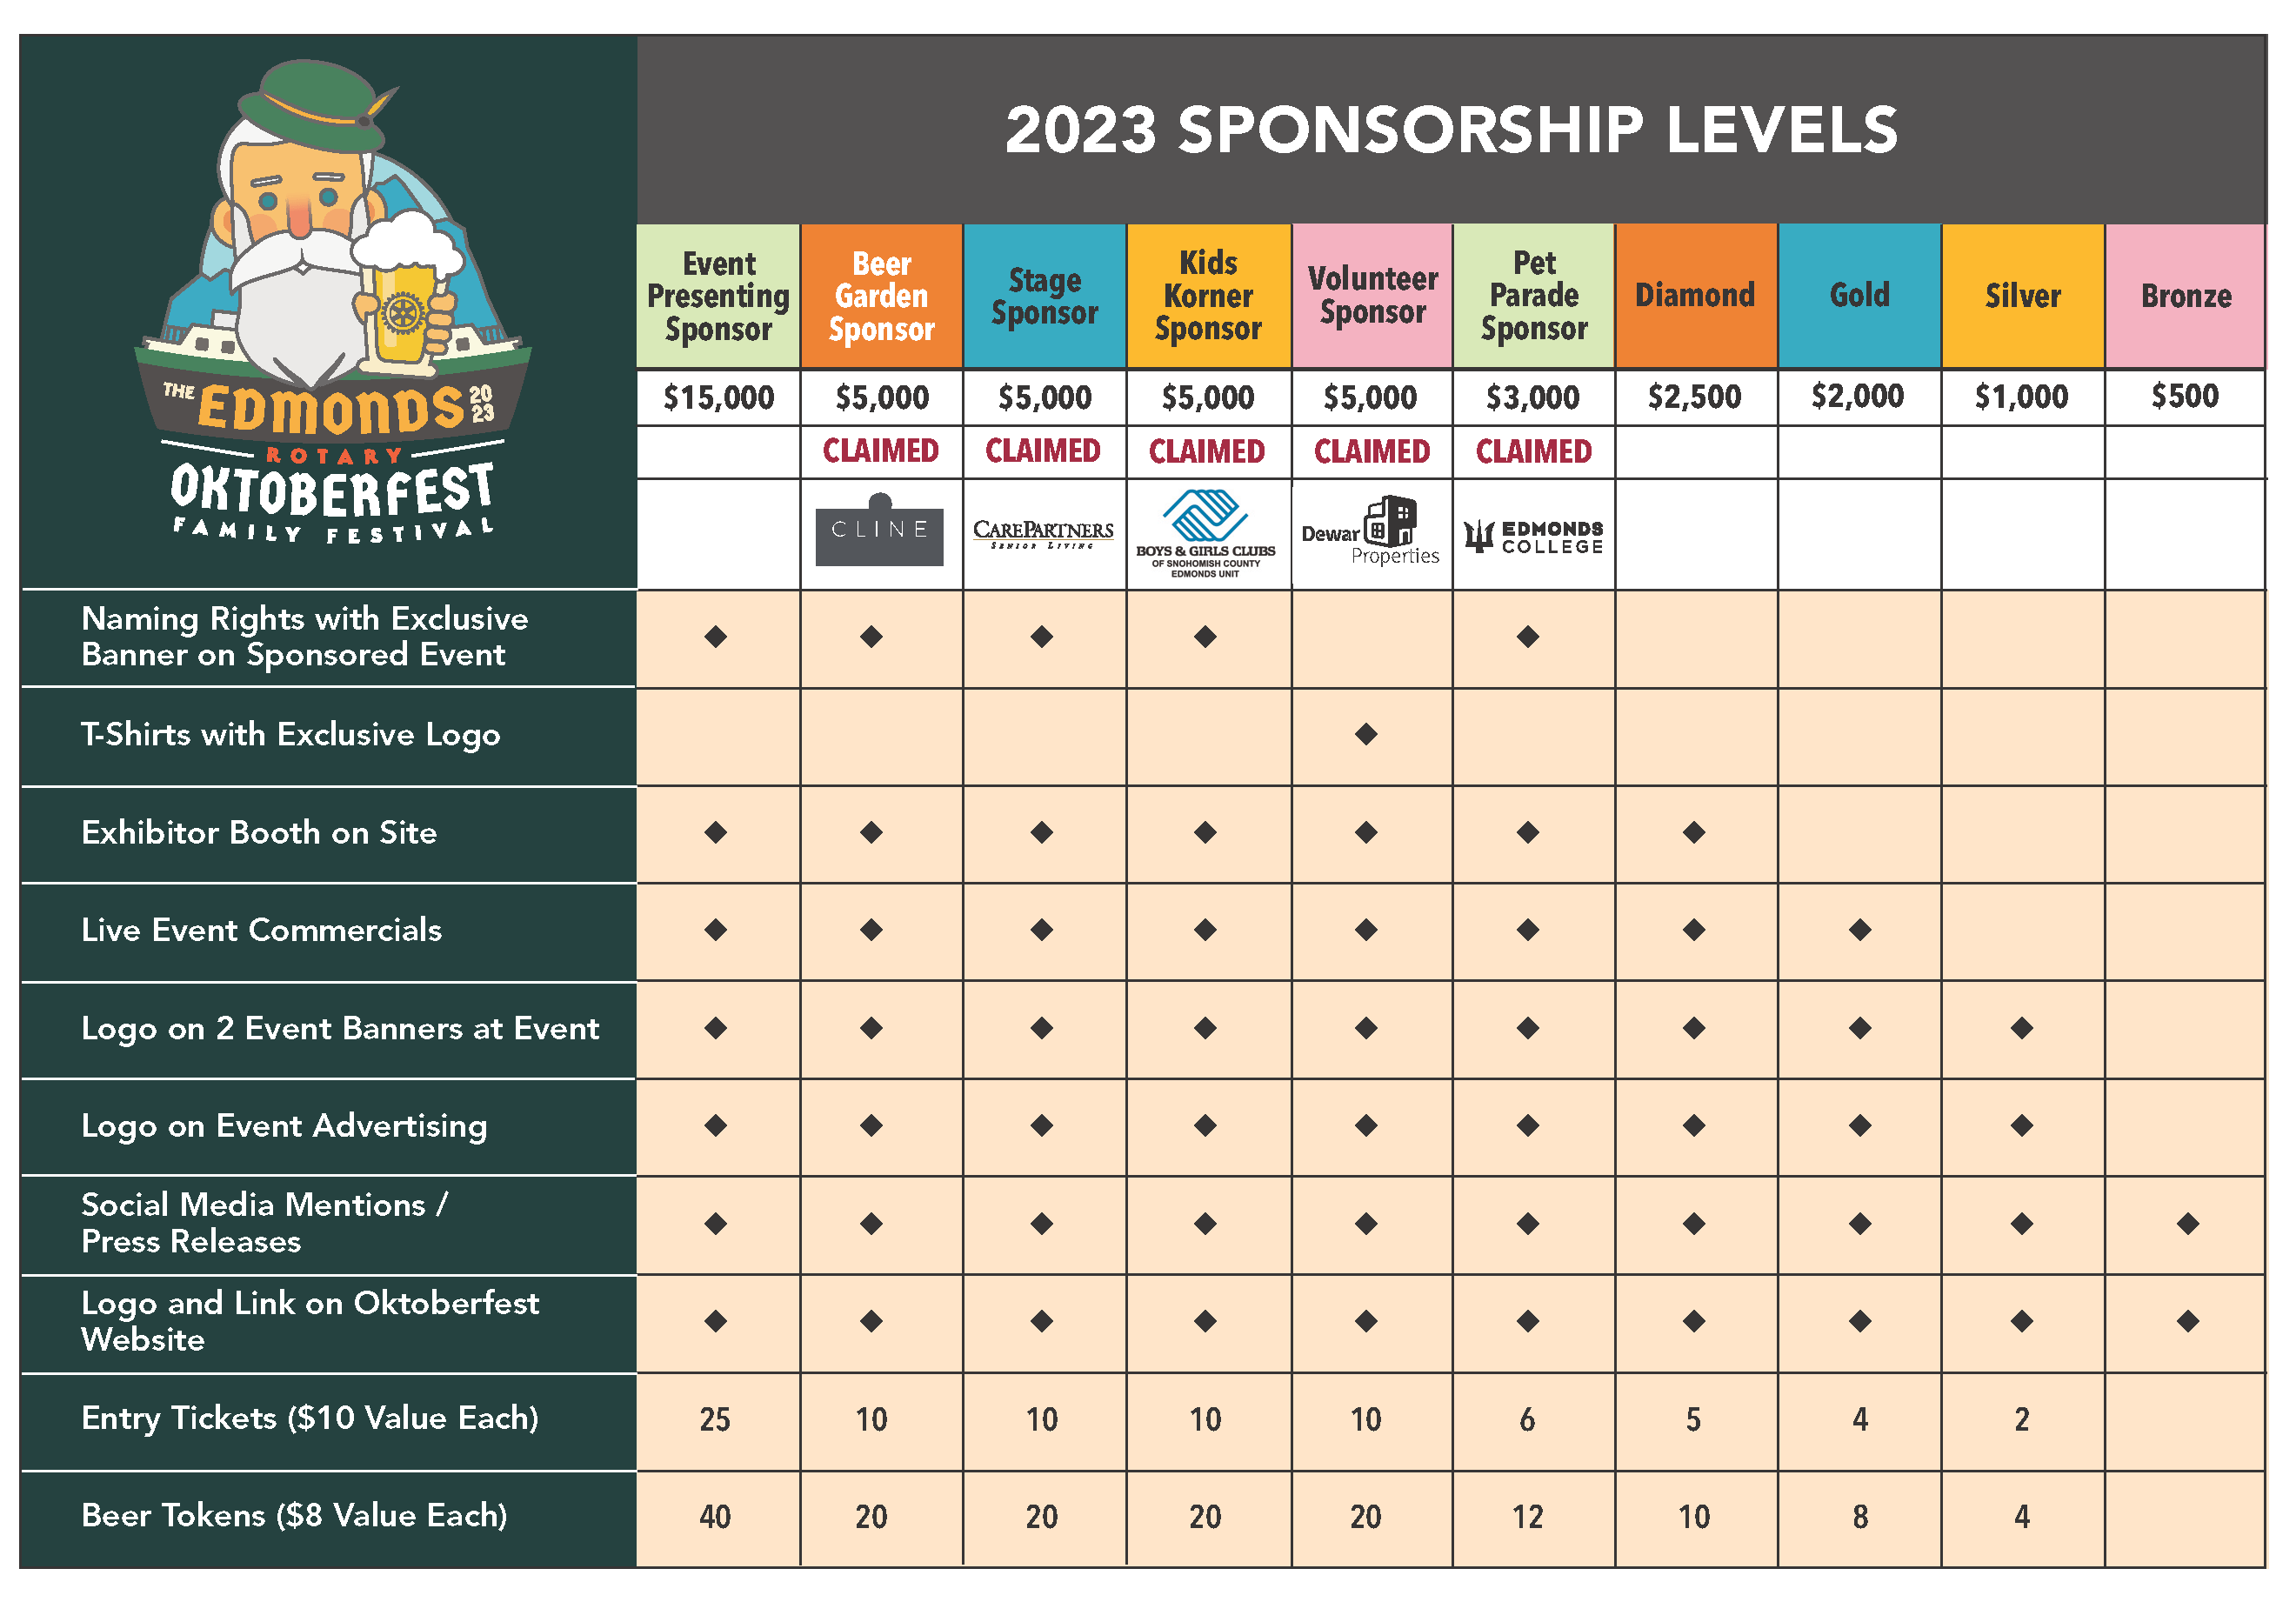 2023 Sponsorship Levels chart image